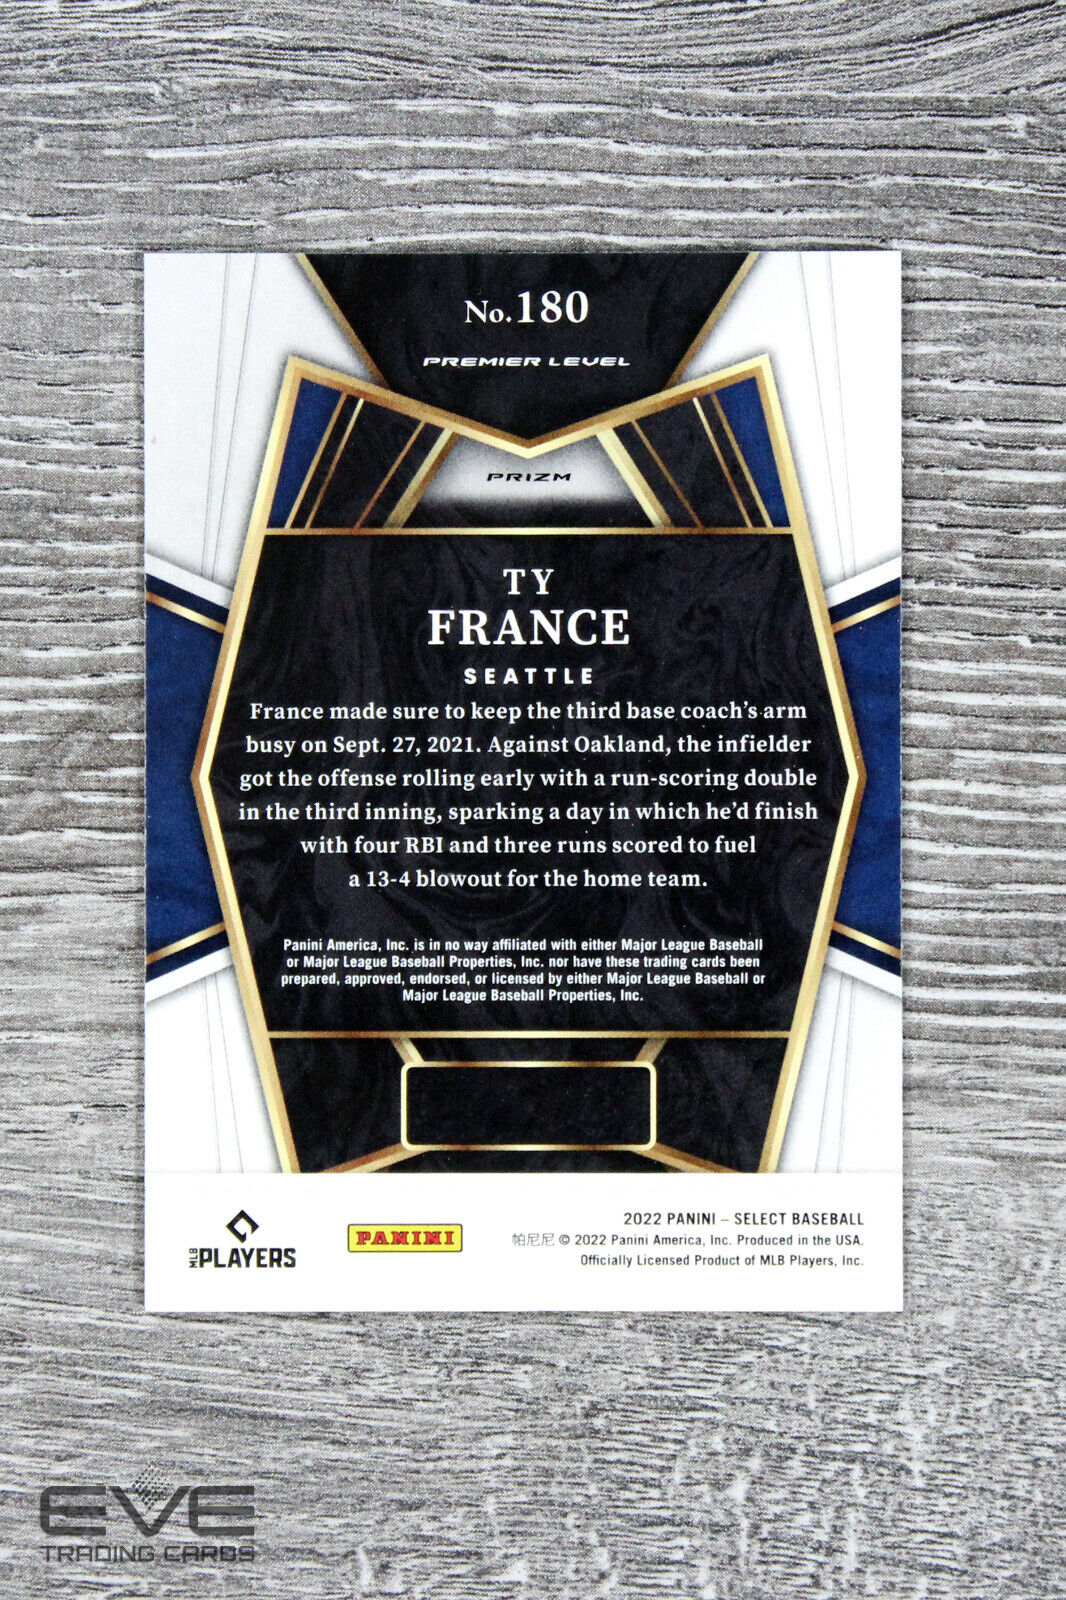 2022 Panini Select Baseball Card #180 Ty France Premier Level Holo Prizm - NM/M